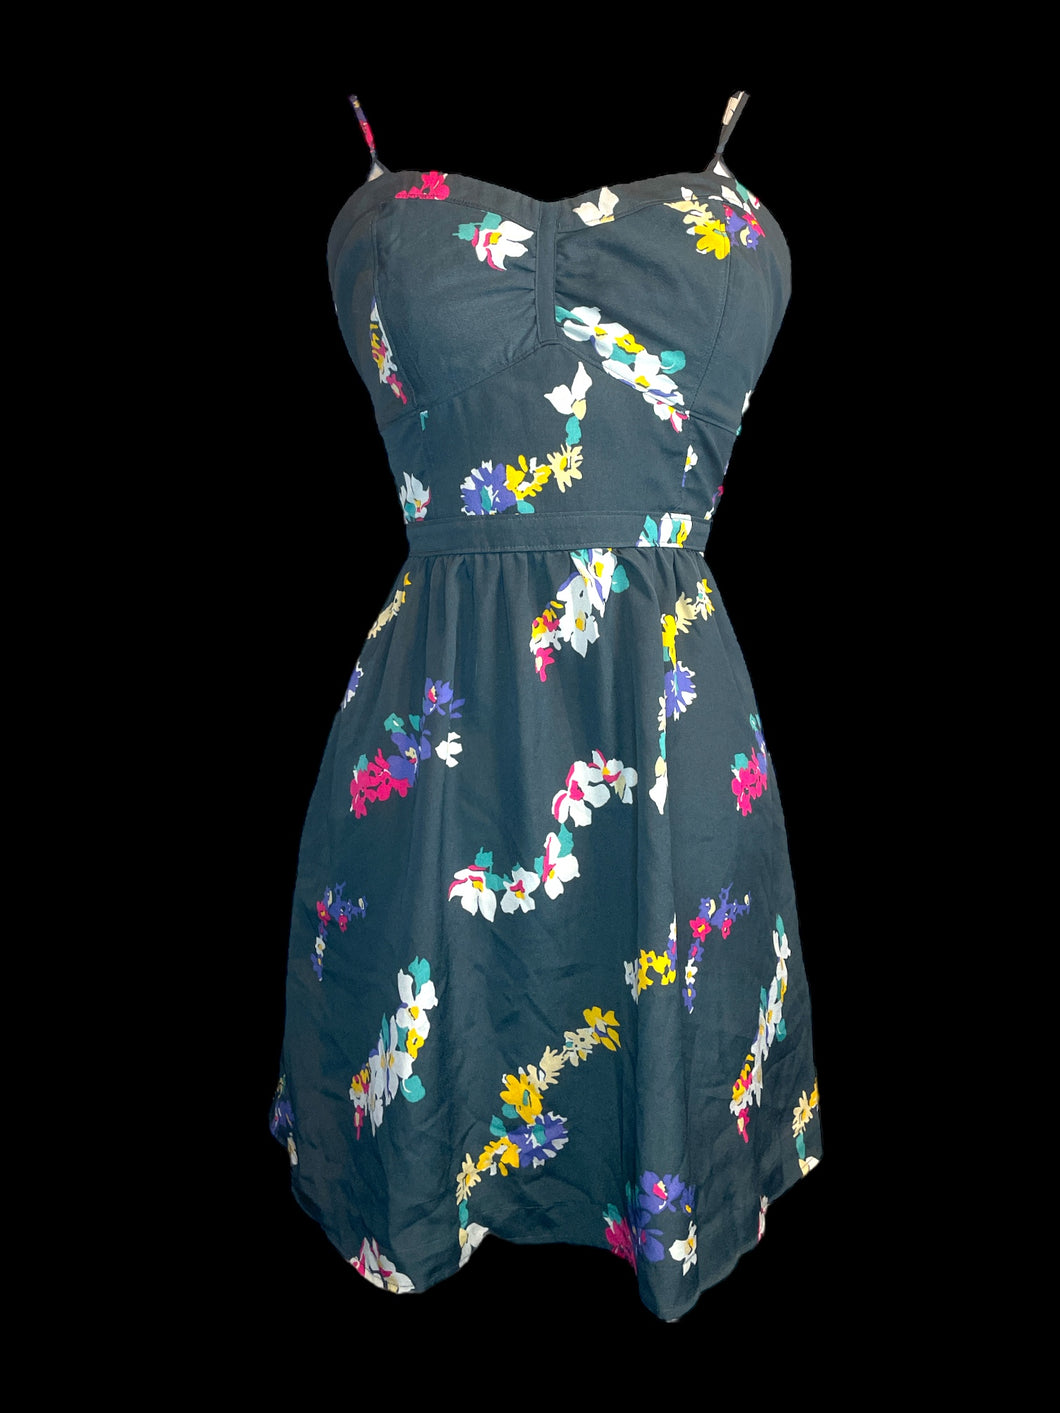 S Black & multicolor floral sleeveless a-line dress w/ lace-up adjustable straps, shirred back, & pockets